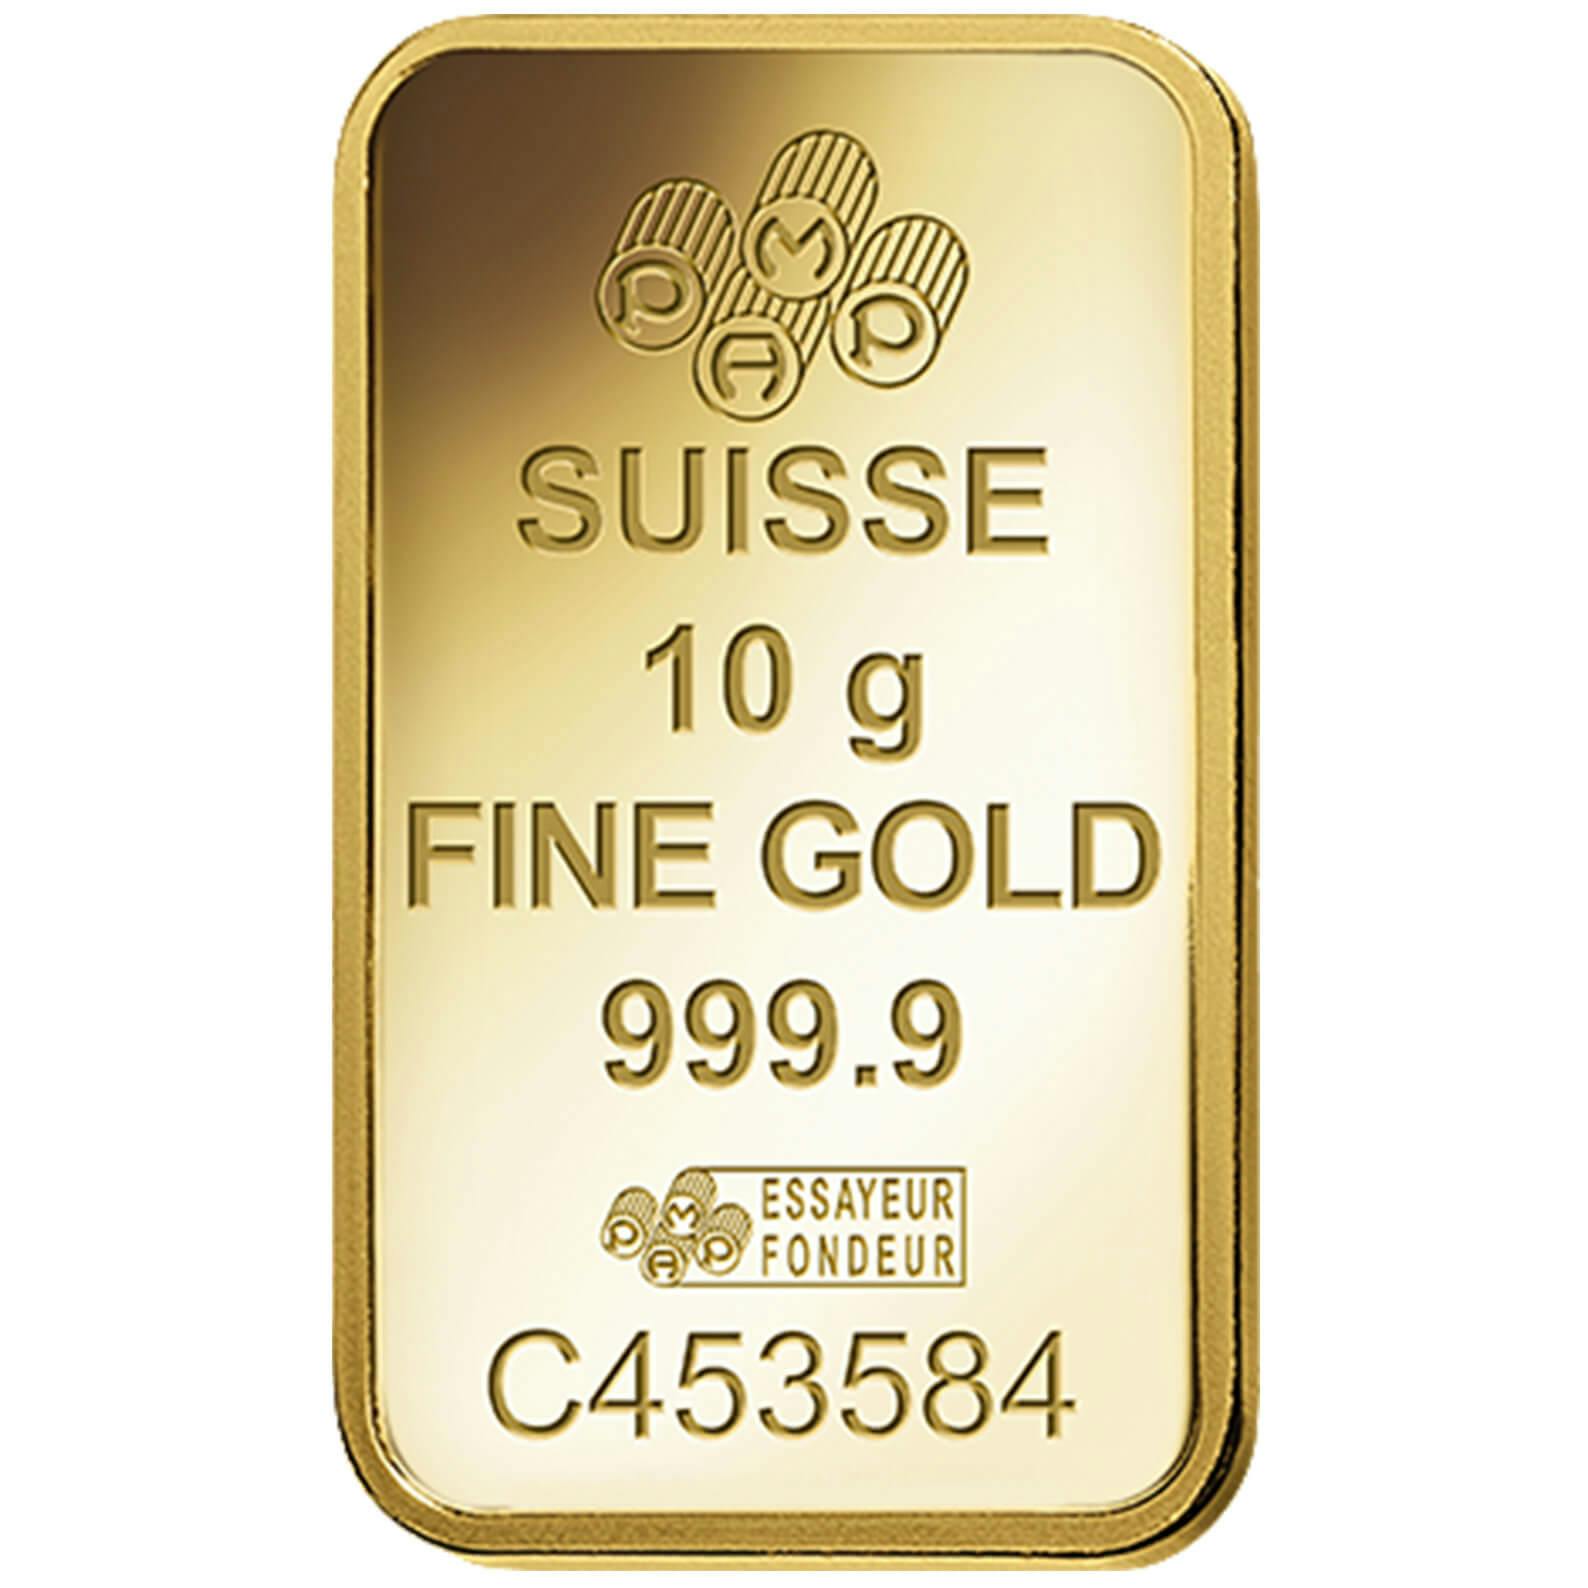 Invest in 10 gram Fine Gold Love Always - PAMP Swiss - Back